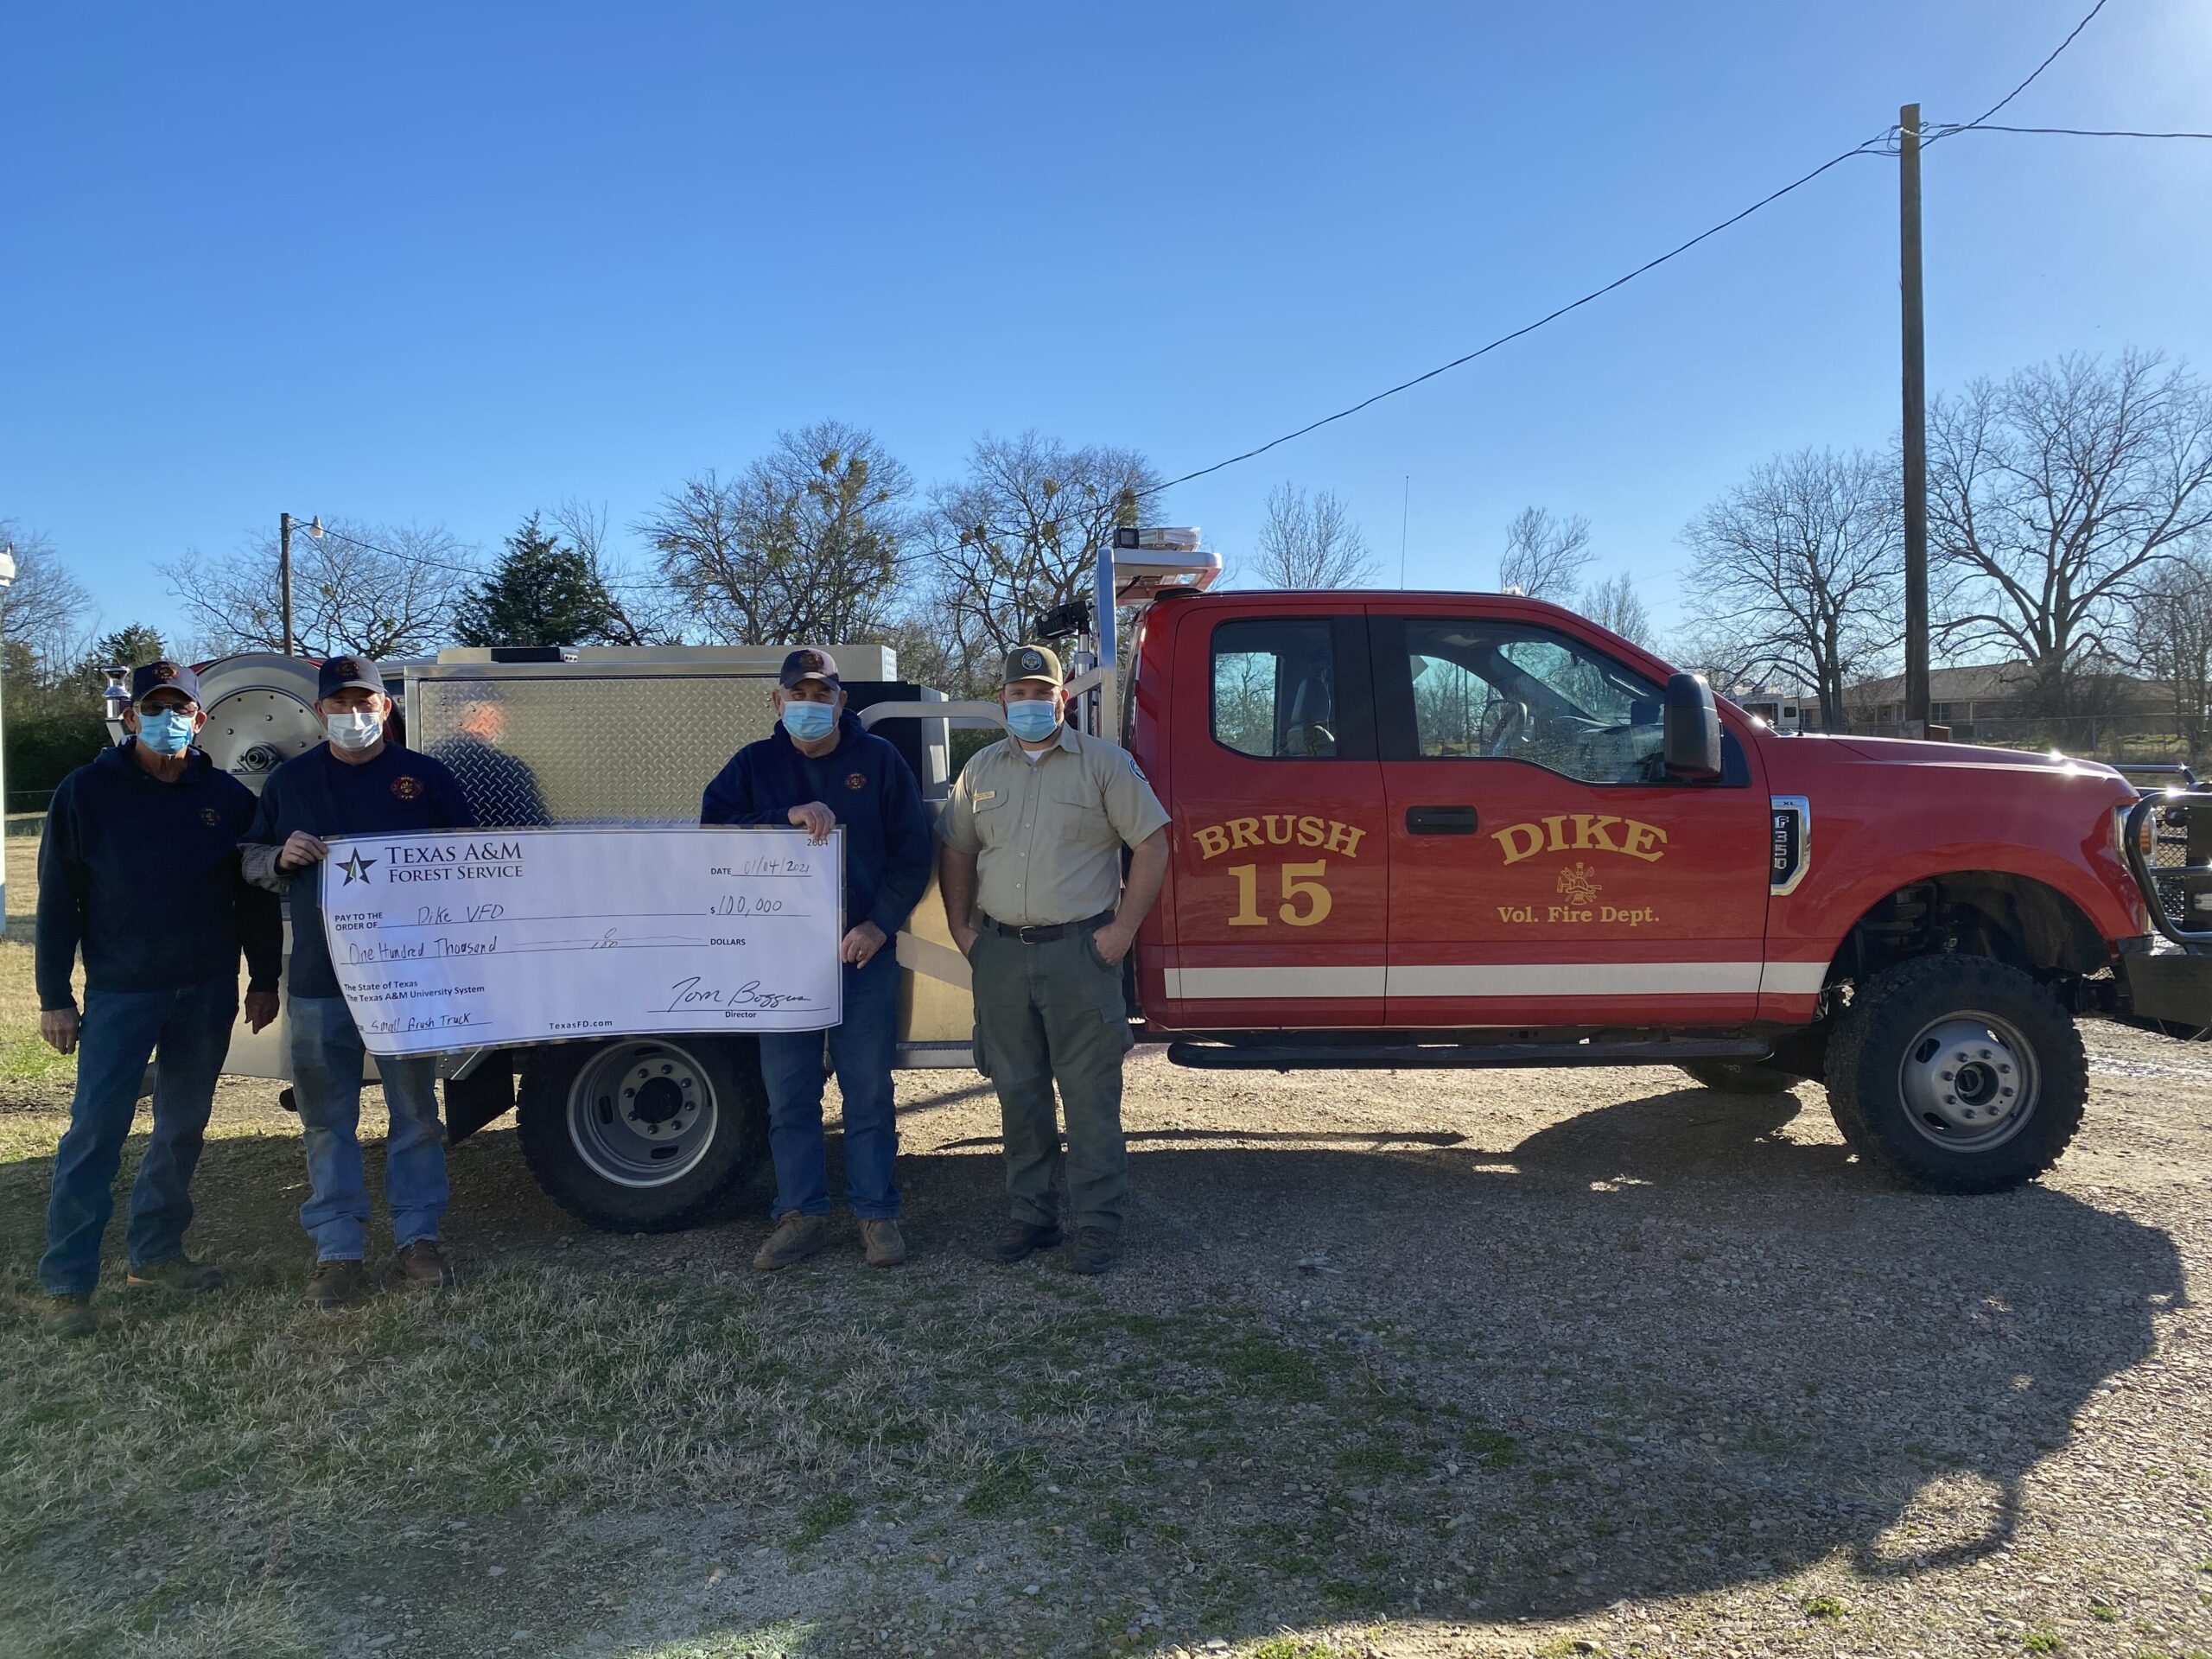 Dike Volunteer Fire Department replaces older apparatus in fleet